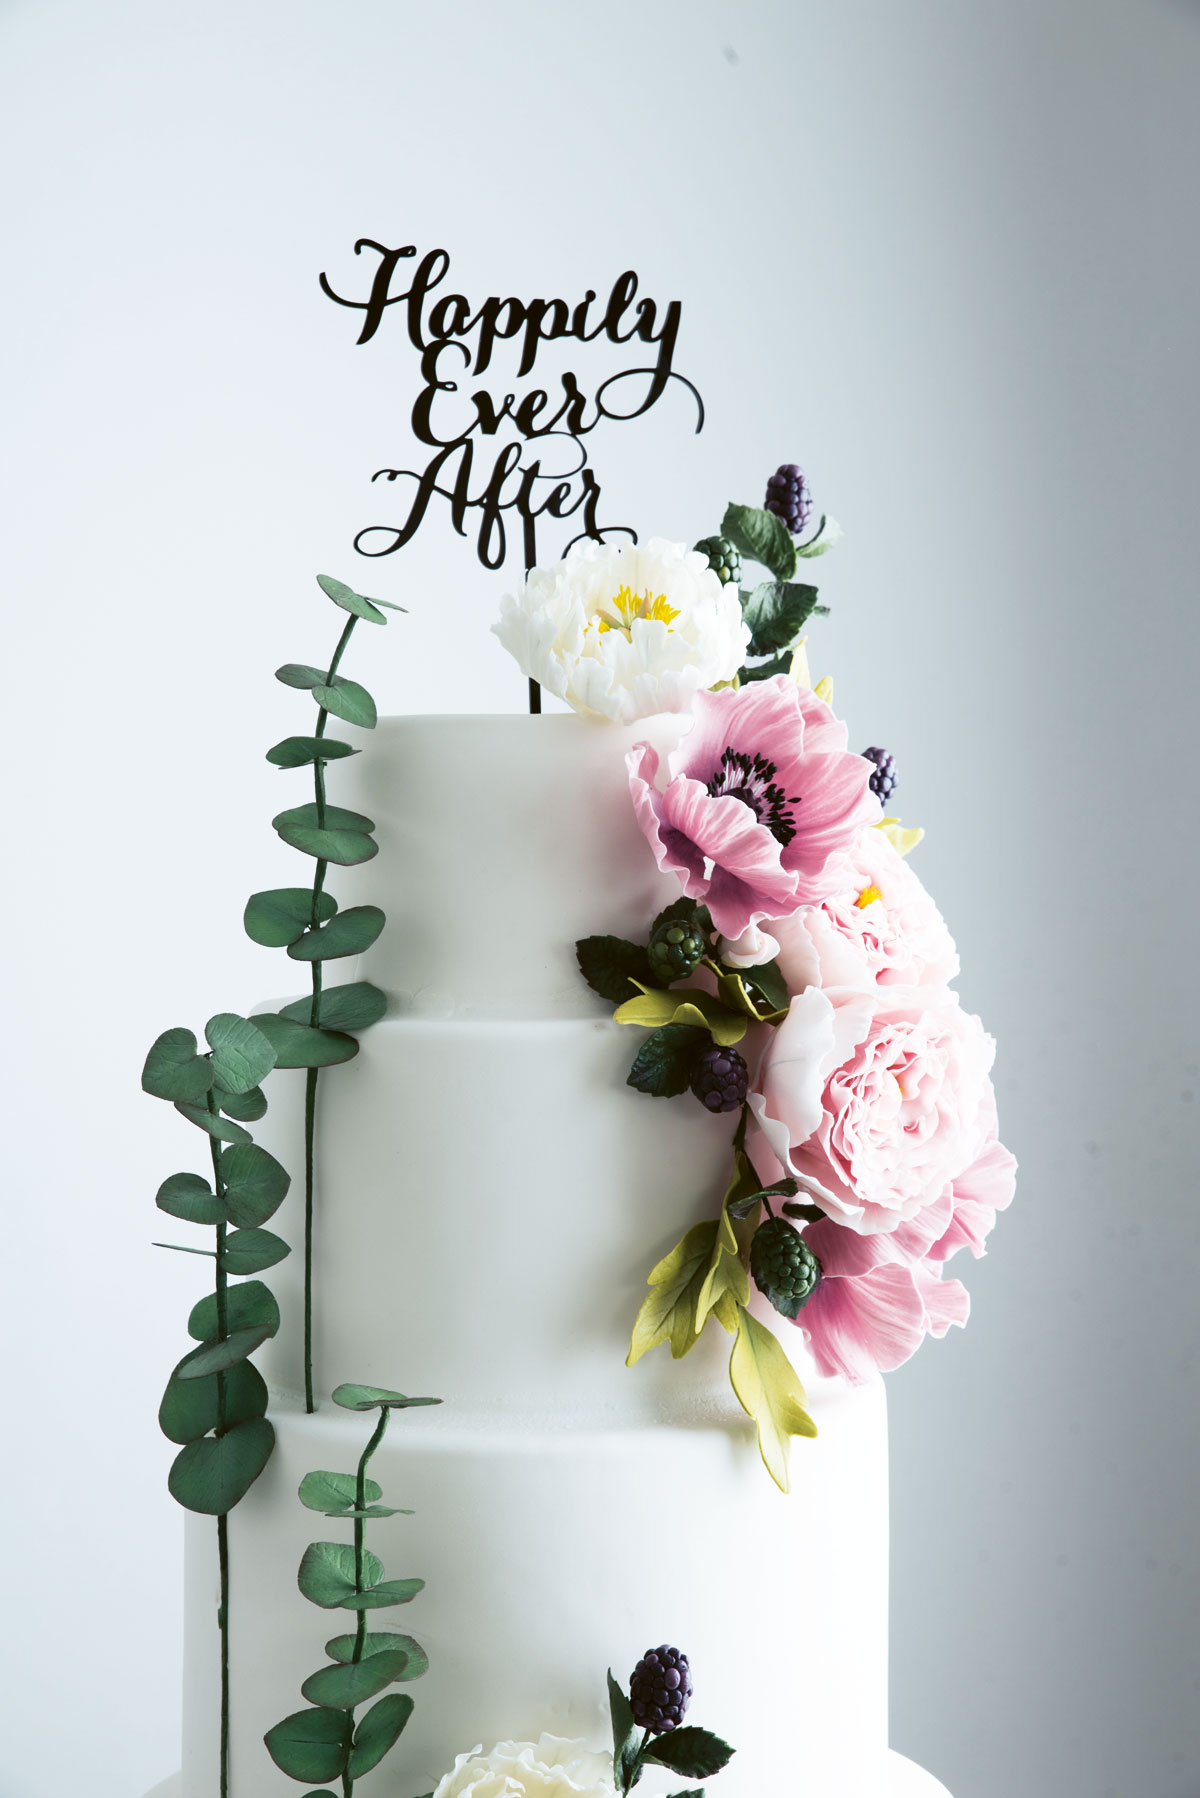 A beautiful three-tiered wedding cake by Cay Cuasay of Cupcake Lab